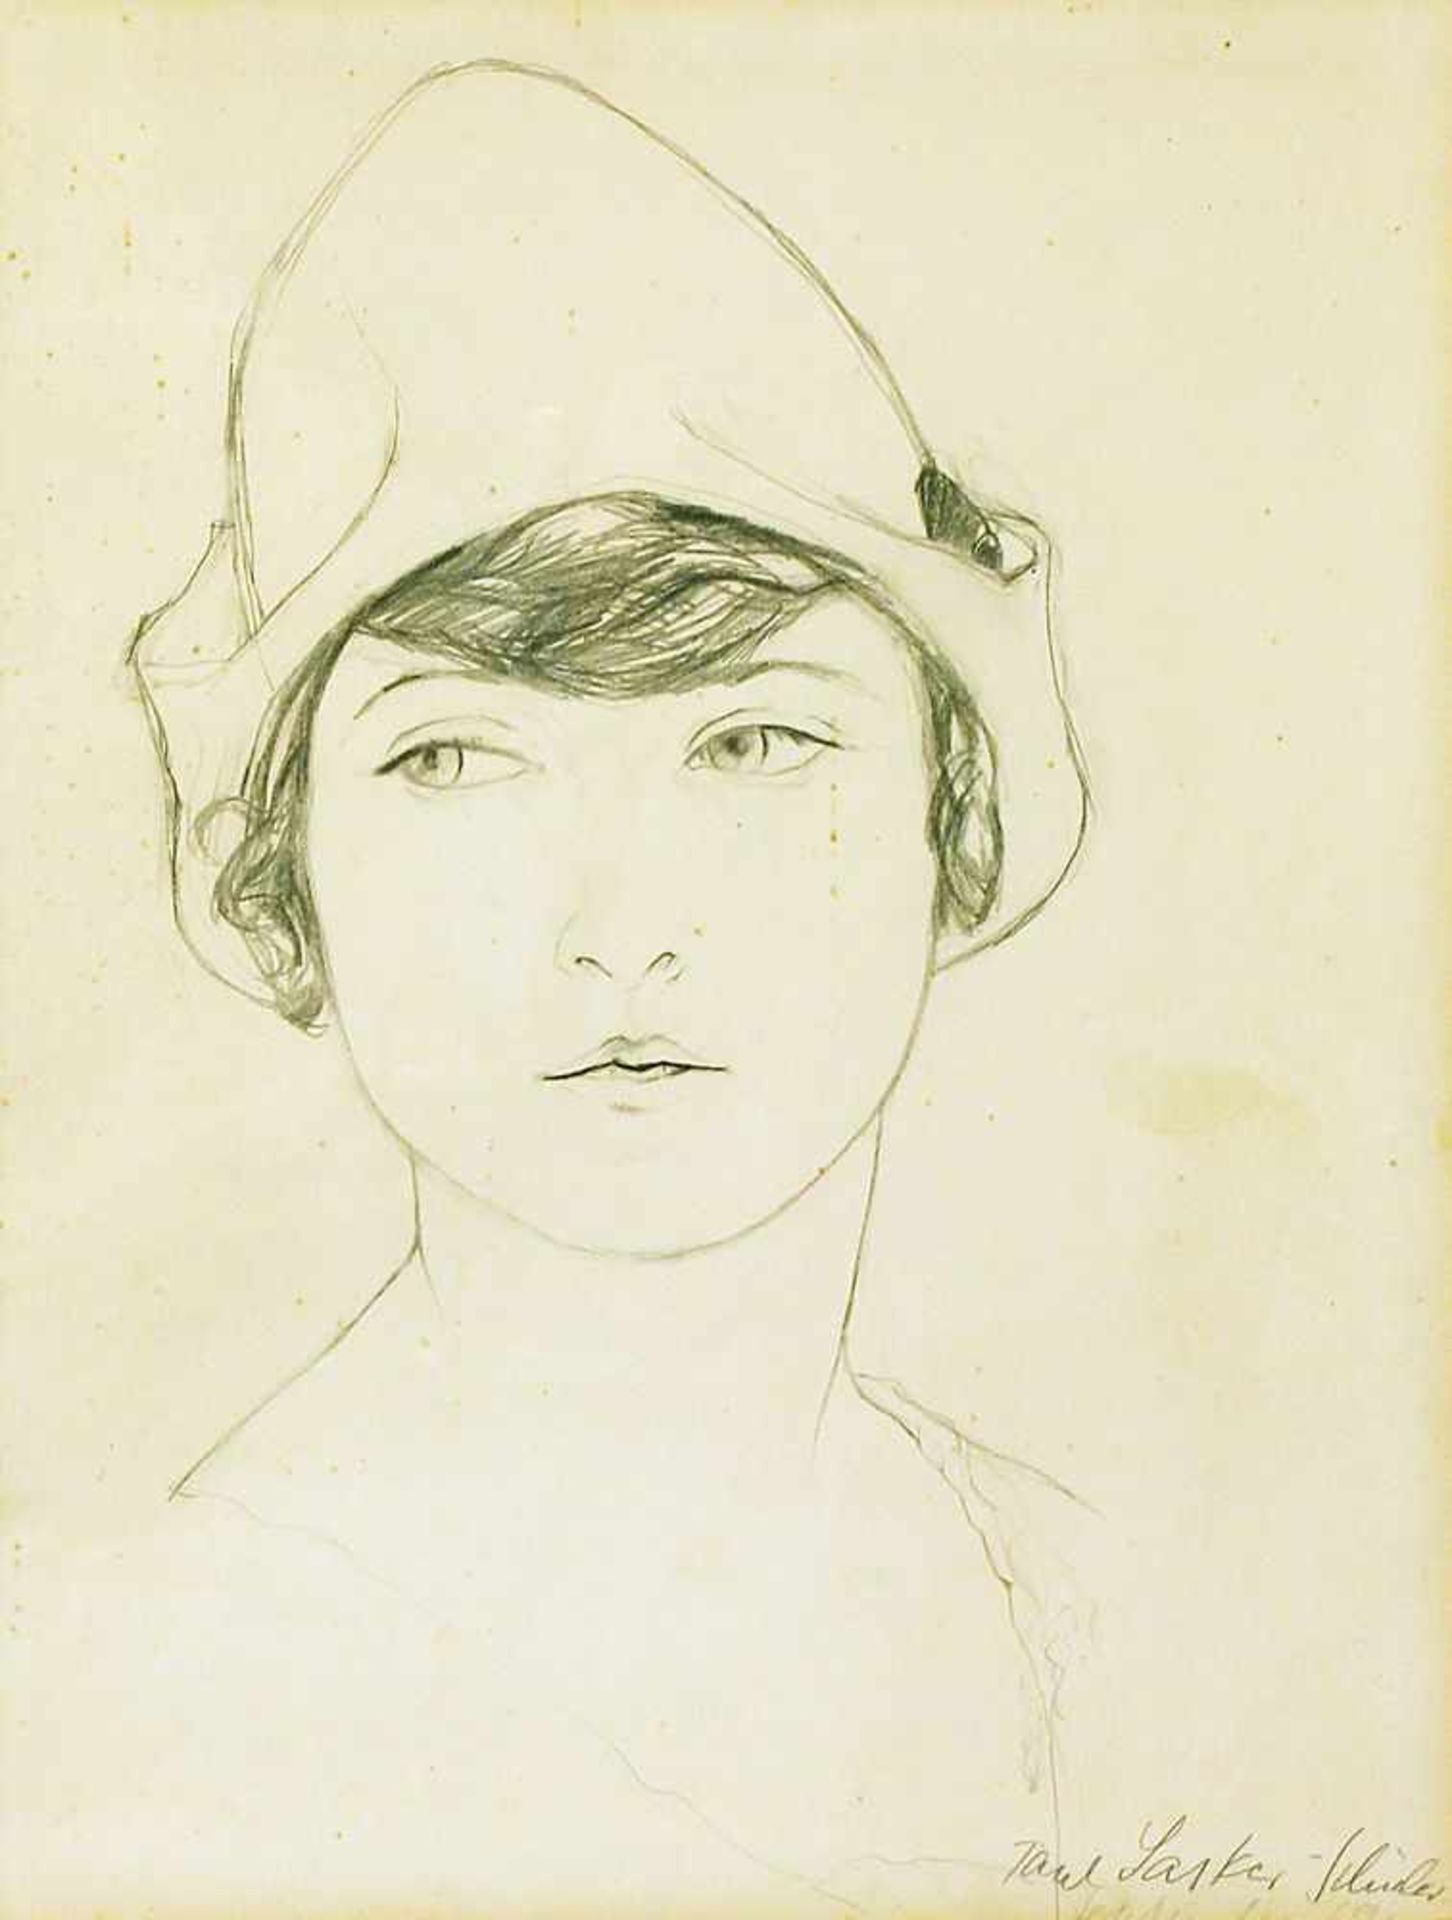 Lasker-Schüler, Paul (1899 - 1927)Portrait, wohl von seiner Mutter Else Lasker-Schüler. Bleistift/